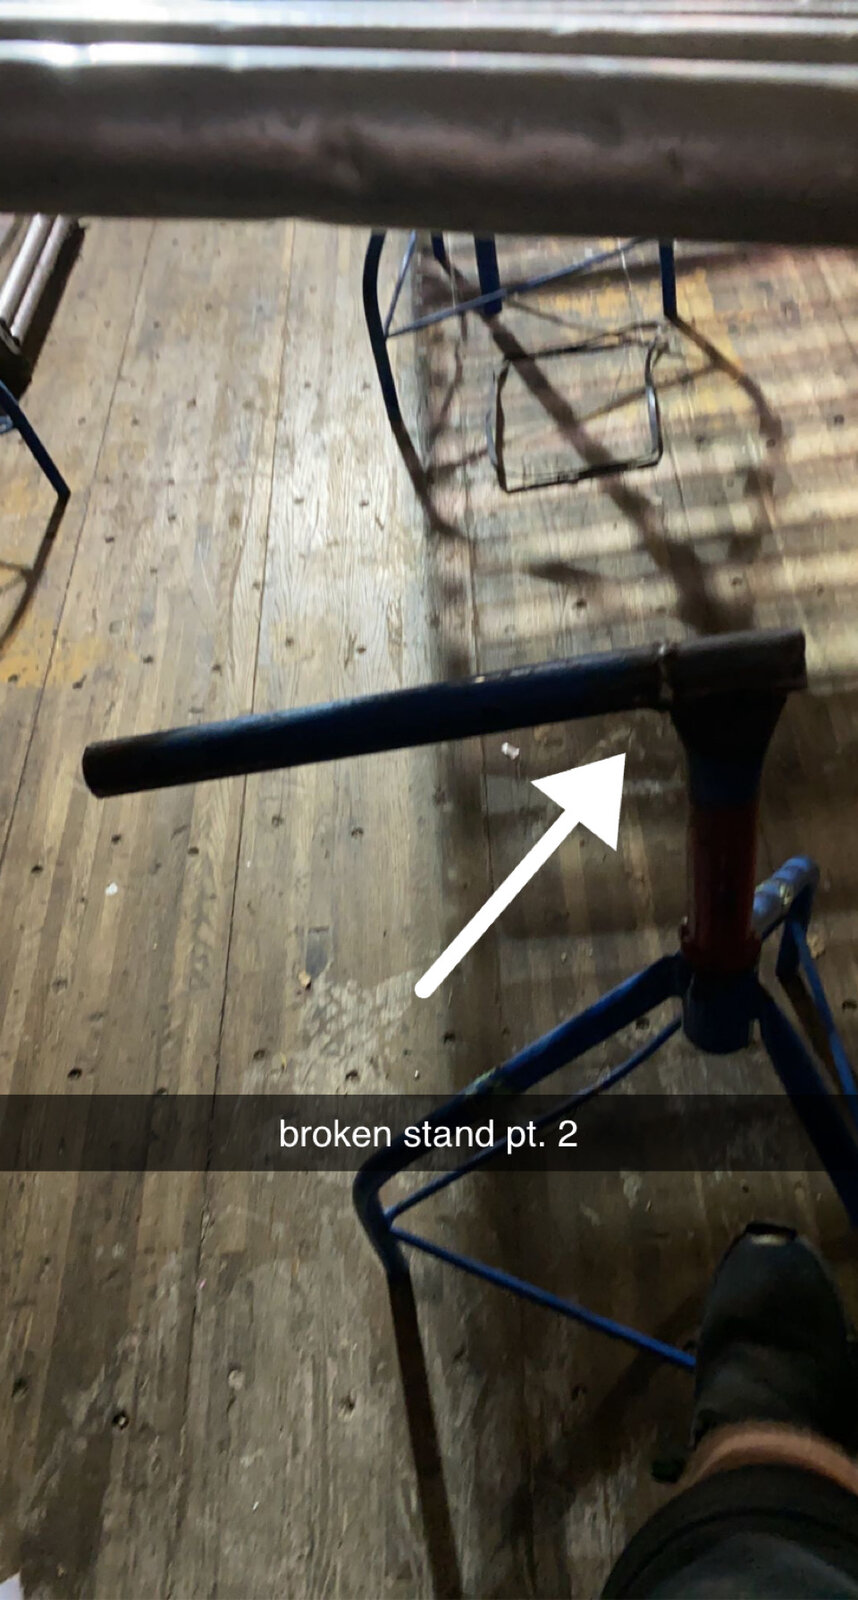 broken roller stand pt. 2.jpg